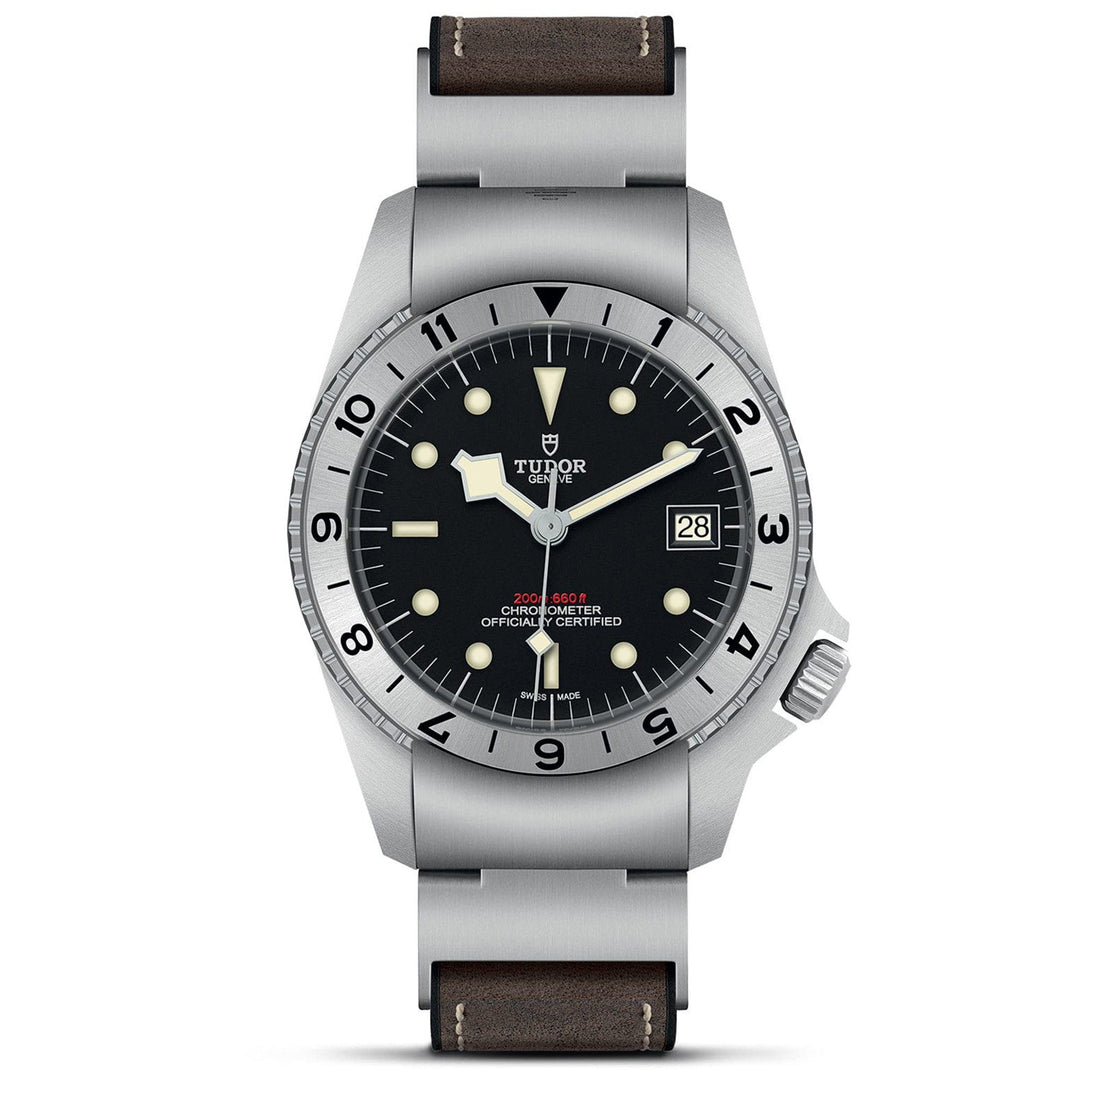 Tudor Black Bay P01 Black Dial Watch - M70150-0001 1